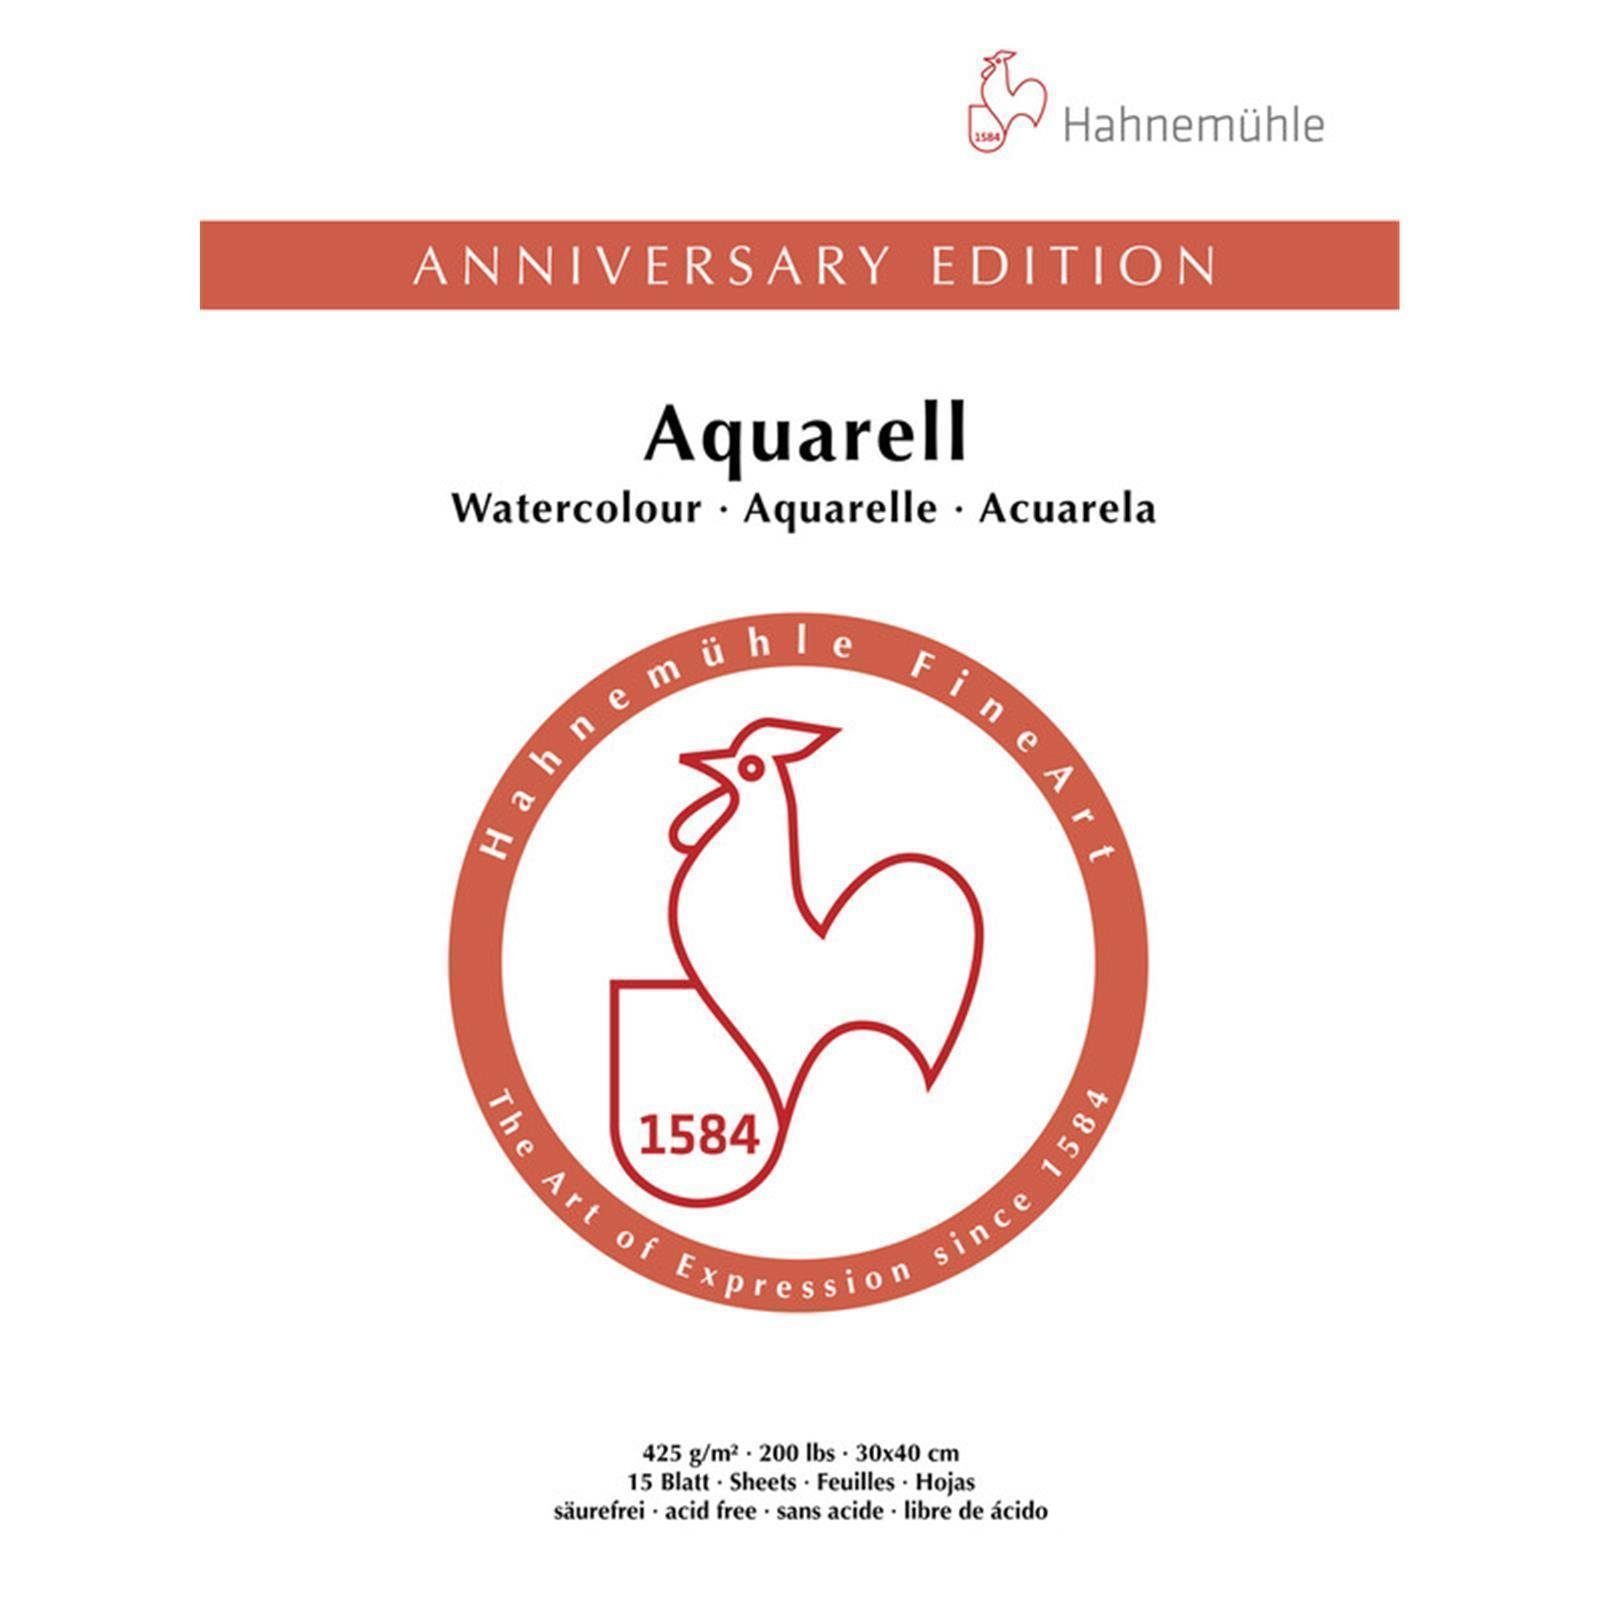 Hahnemühle Aquarellpapier Anniversary Edition - Aquarell - 425 g/m² - 30 x 40 cm - 50 Blatt